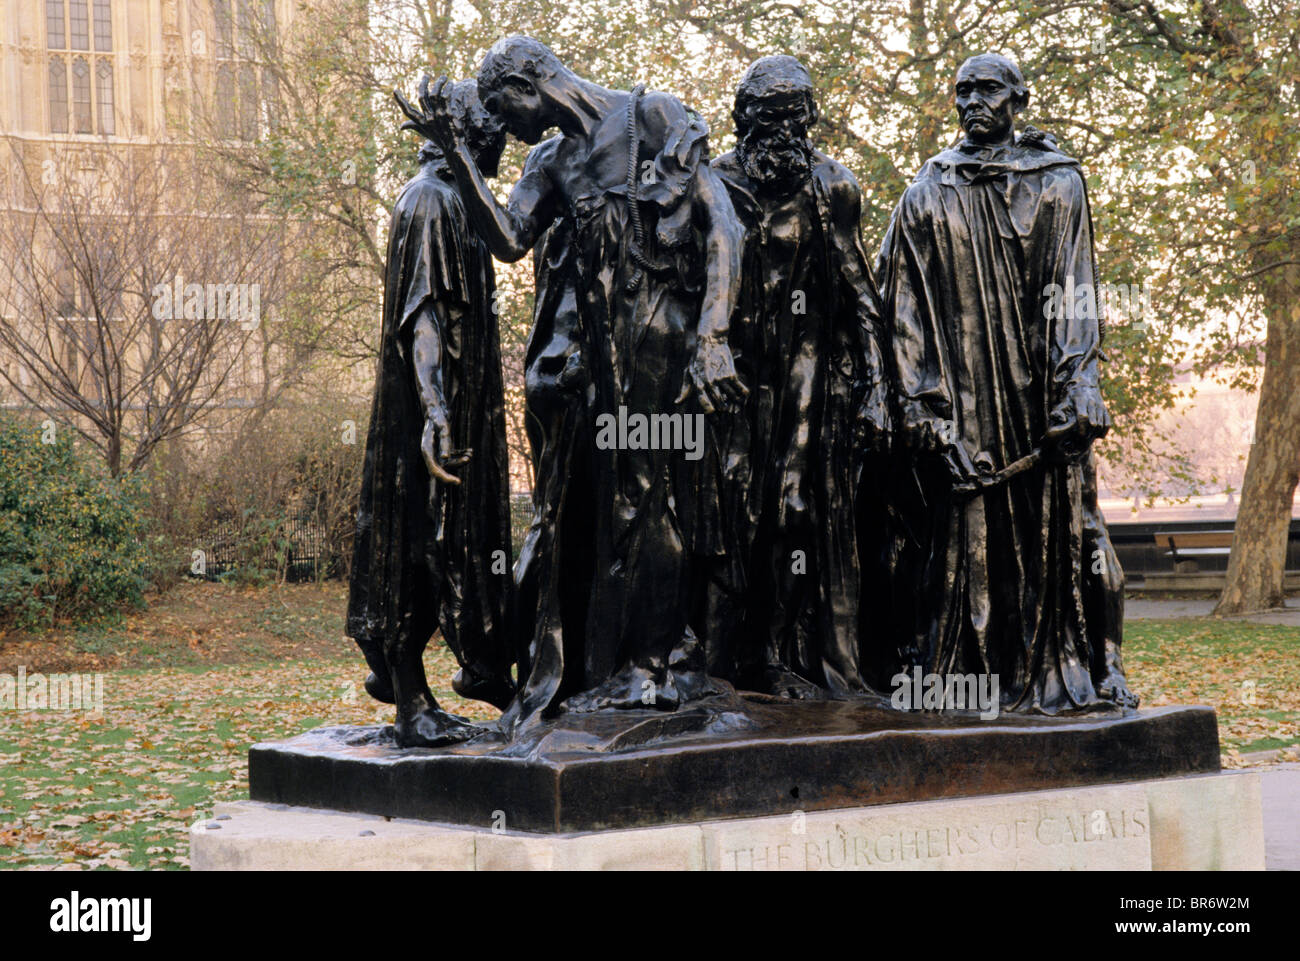 Bürger von Calais, Victoria Tower Gardens, Embankment, London, Auguste Rodin Skulptur Statue Statuen Westminster England UK Stockfoto